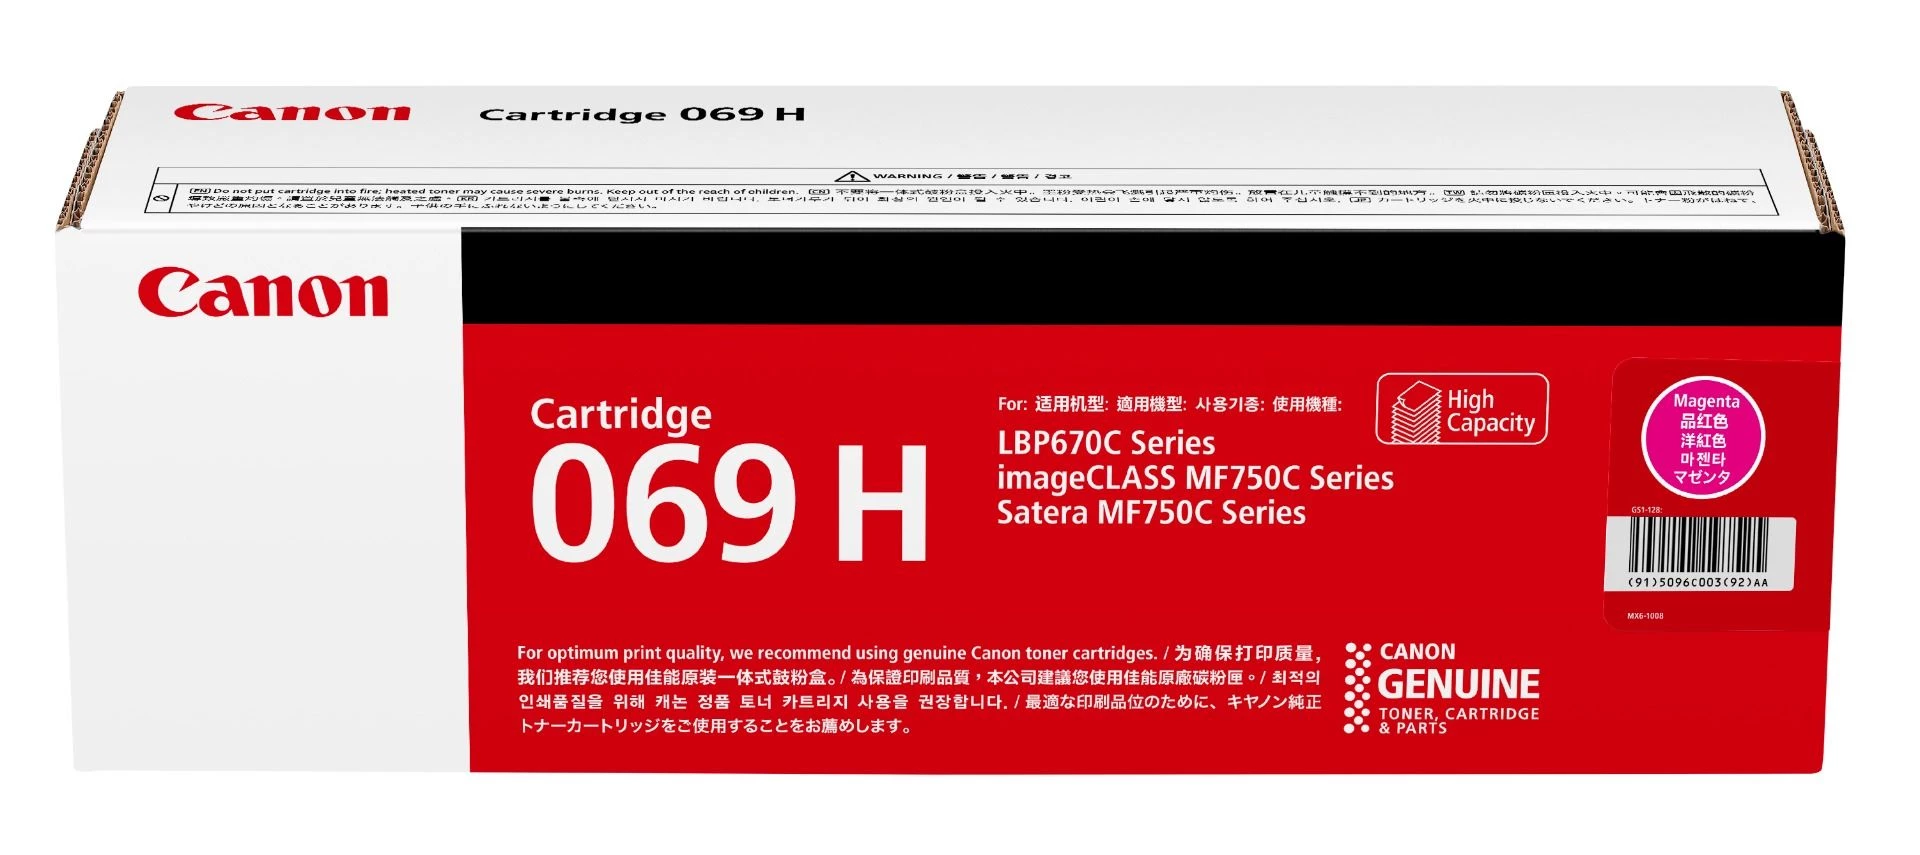 Canon Cartridge 069H M Magenta Toner Cartridge (High Capacity)